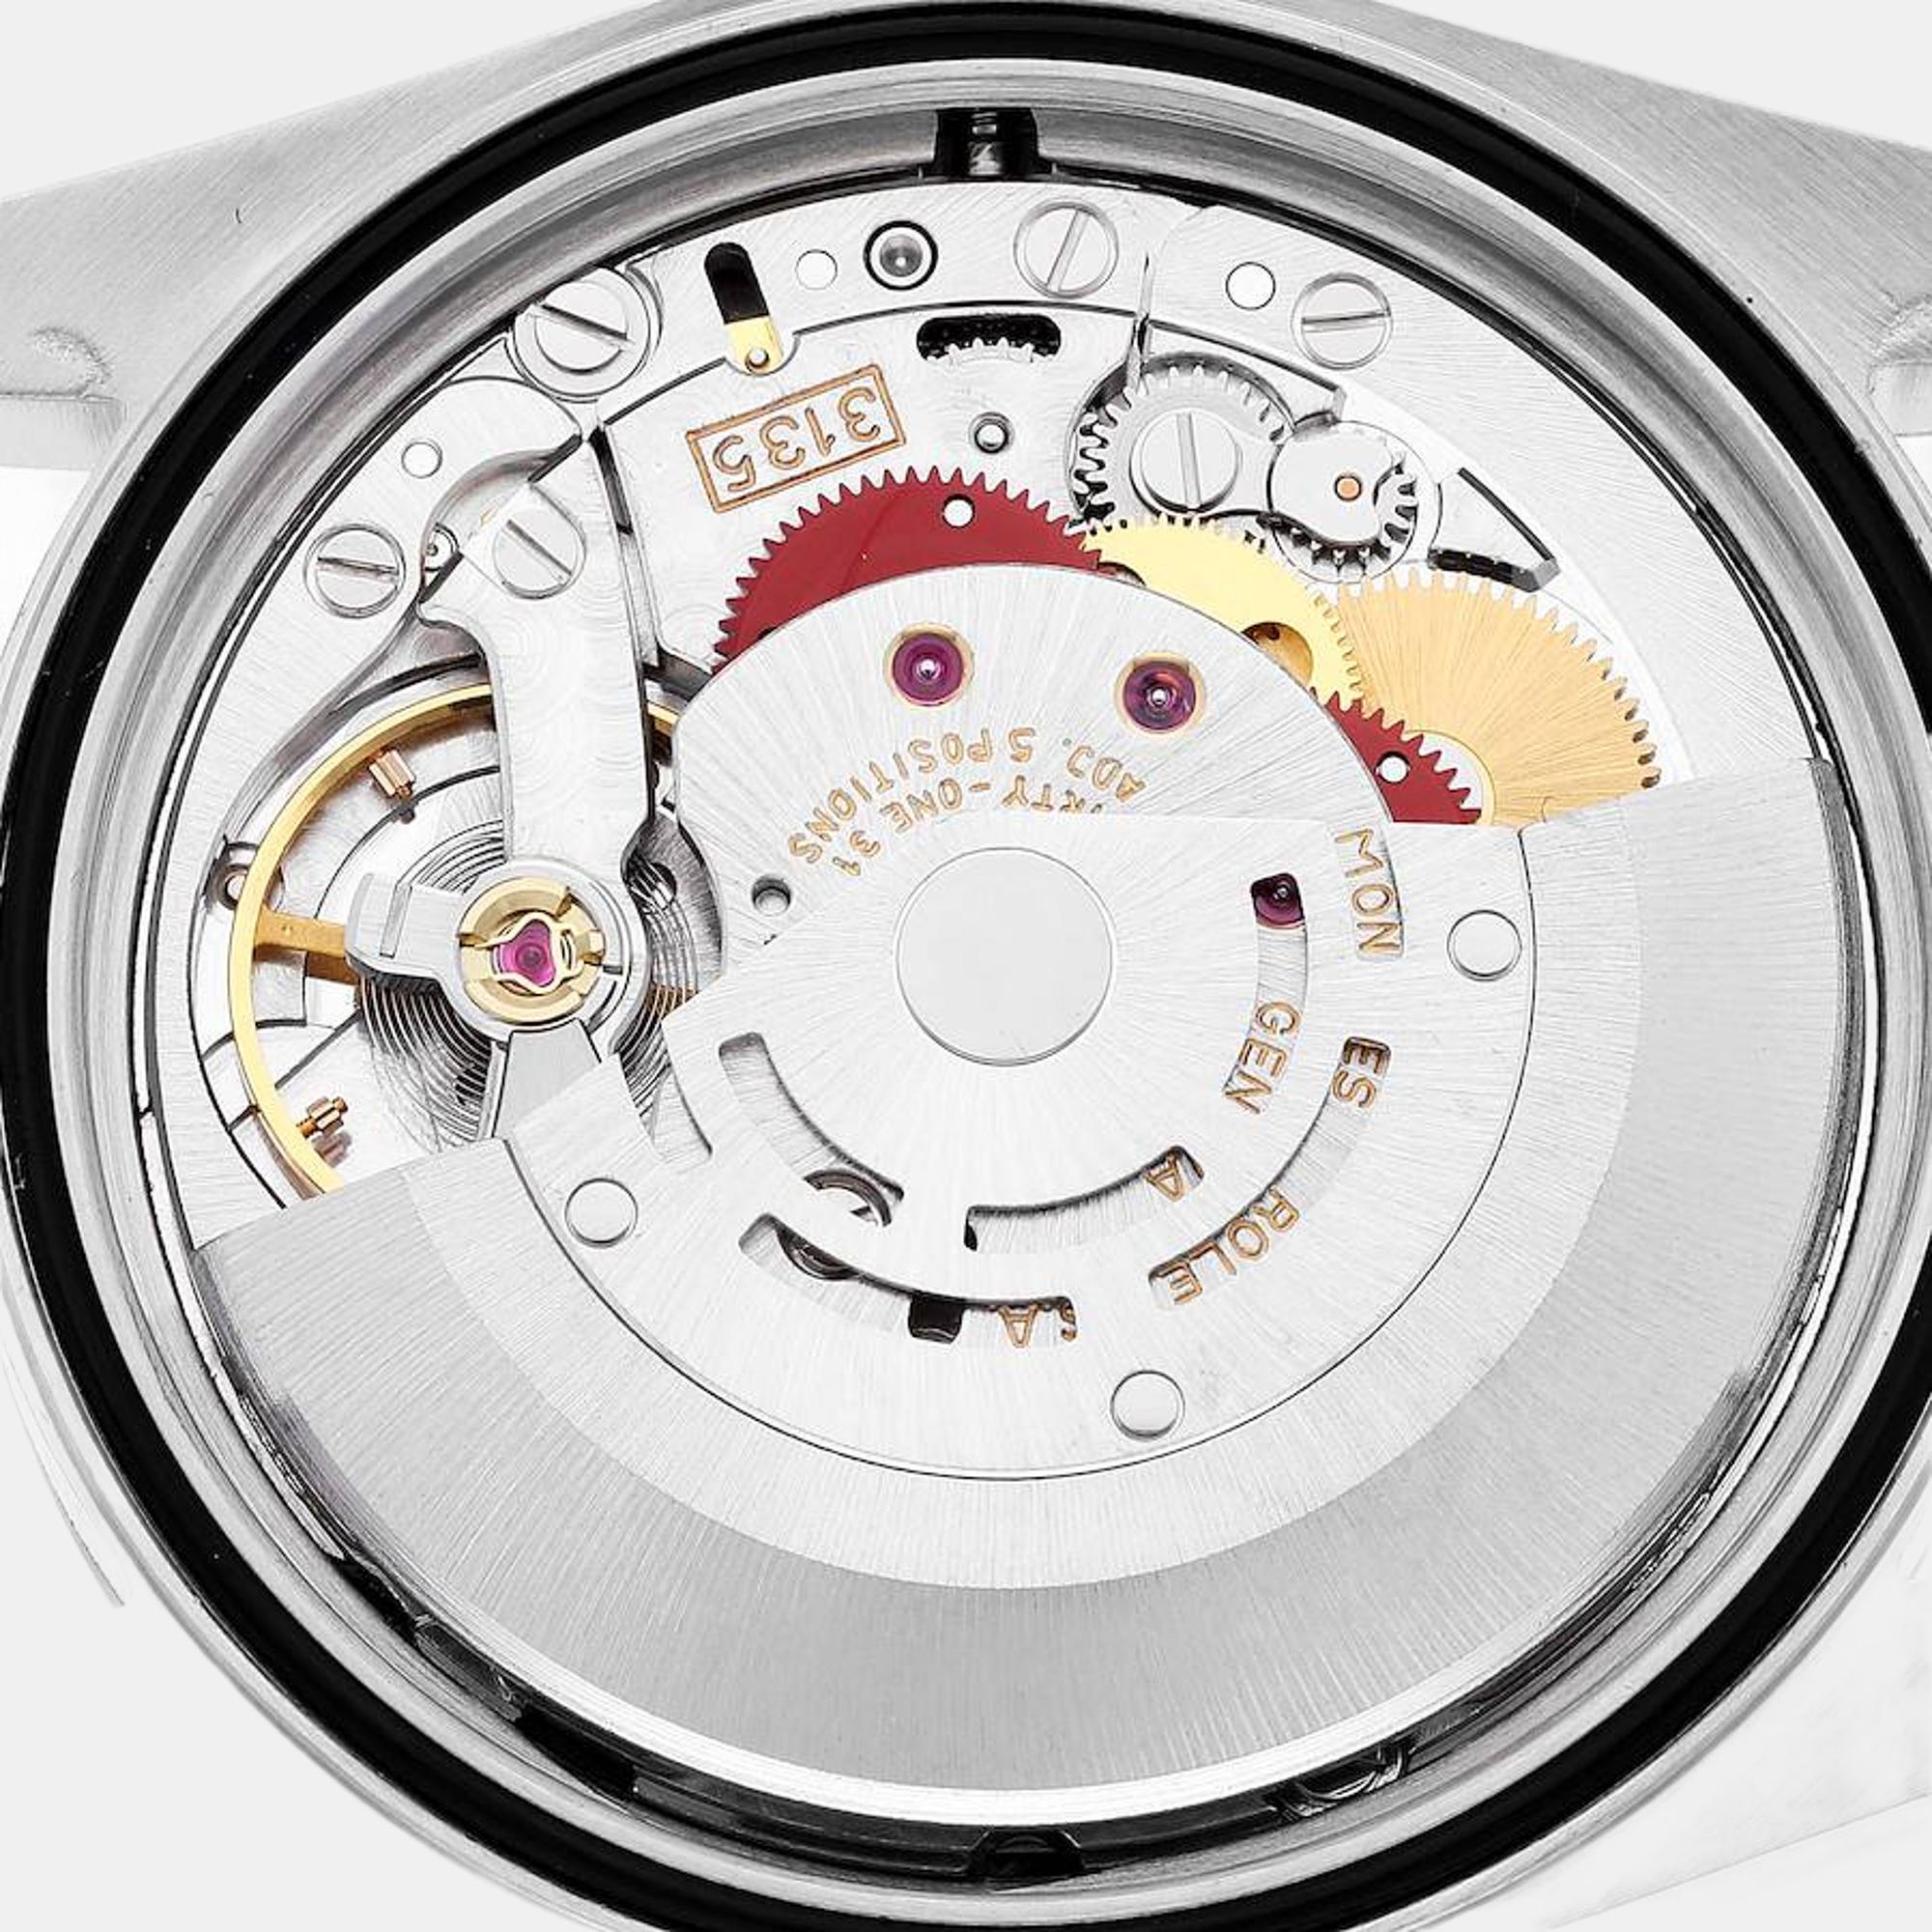 Rolex Datejust Silver Dial Engine Turned Bezel Steel Mens Watch 16220